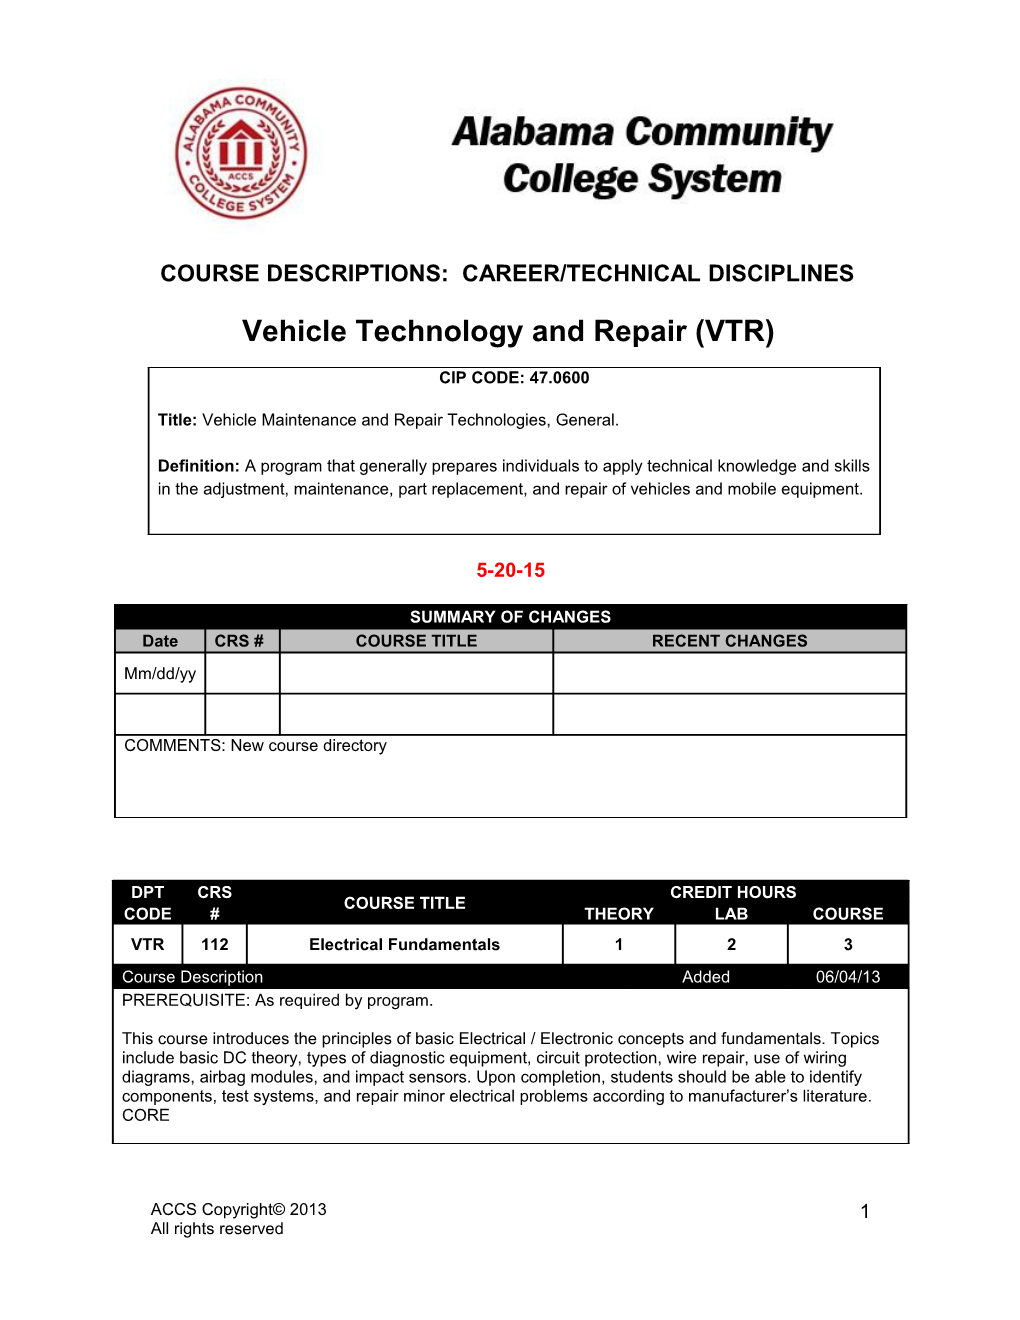 VTR Vehicle Technology Repair